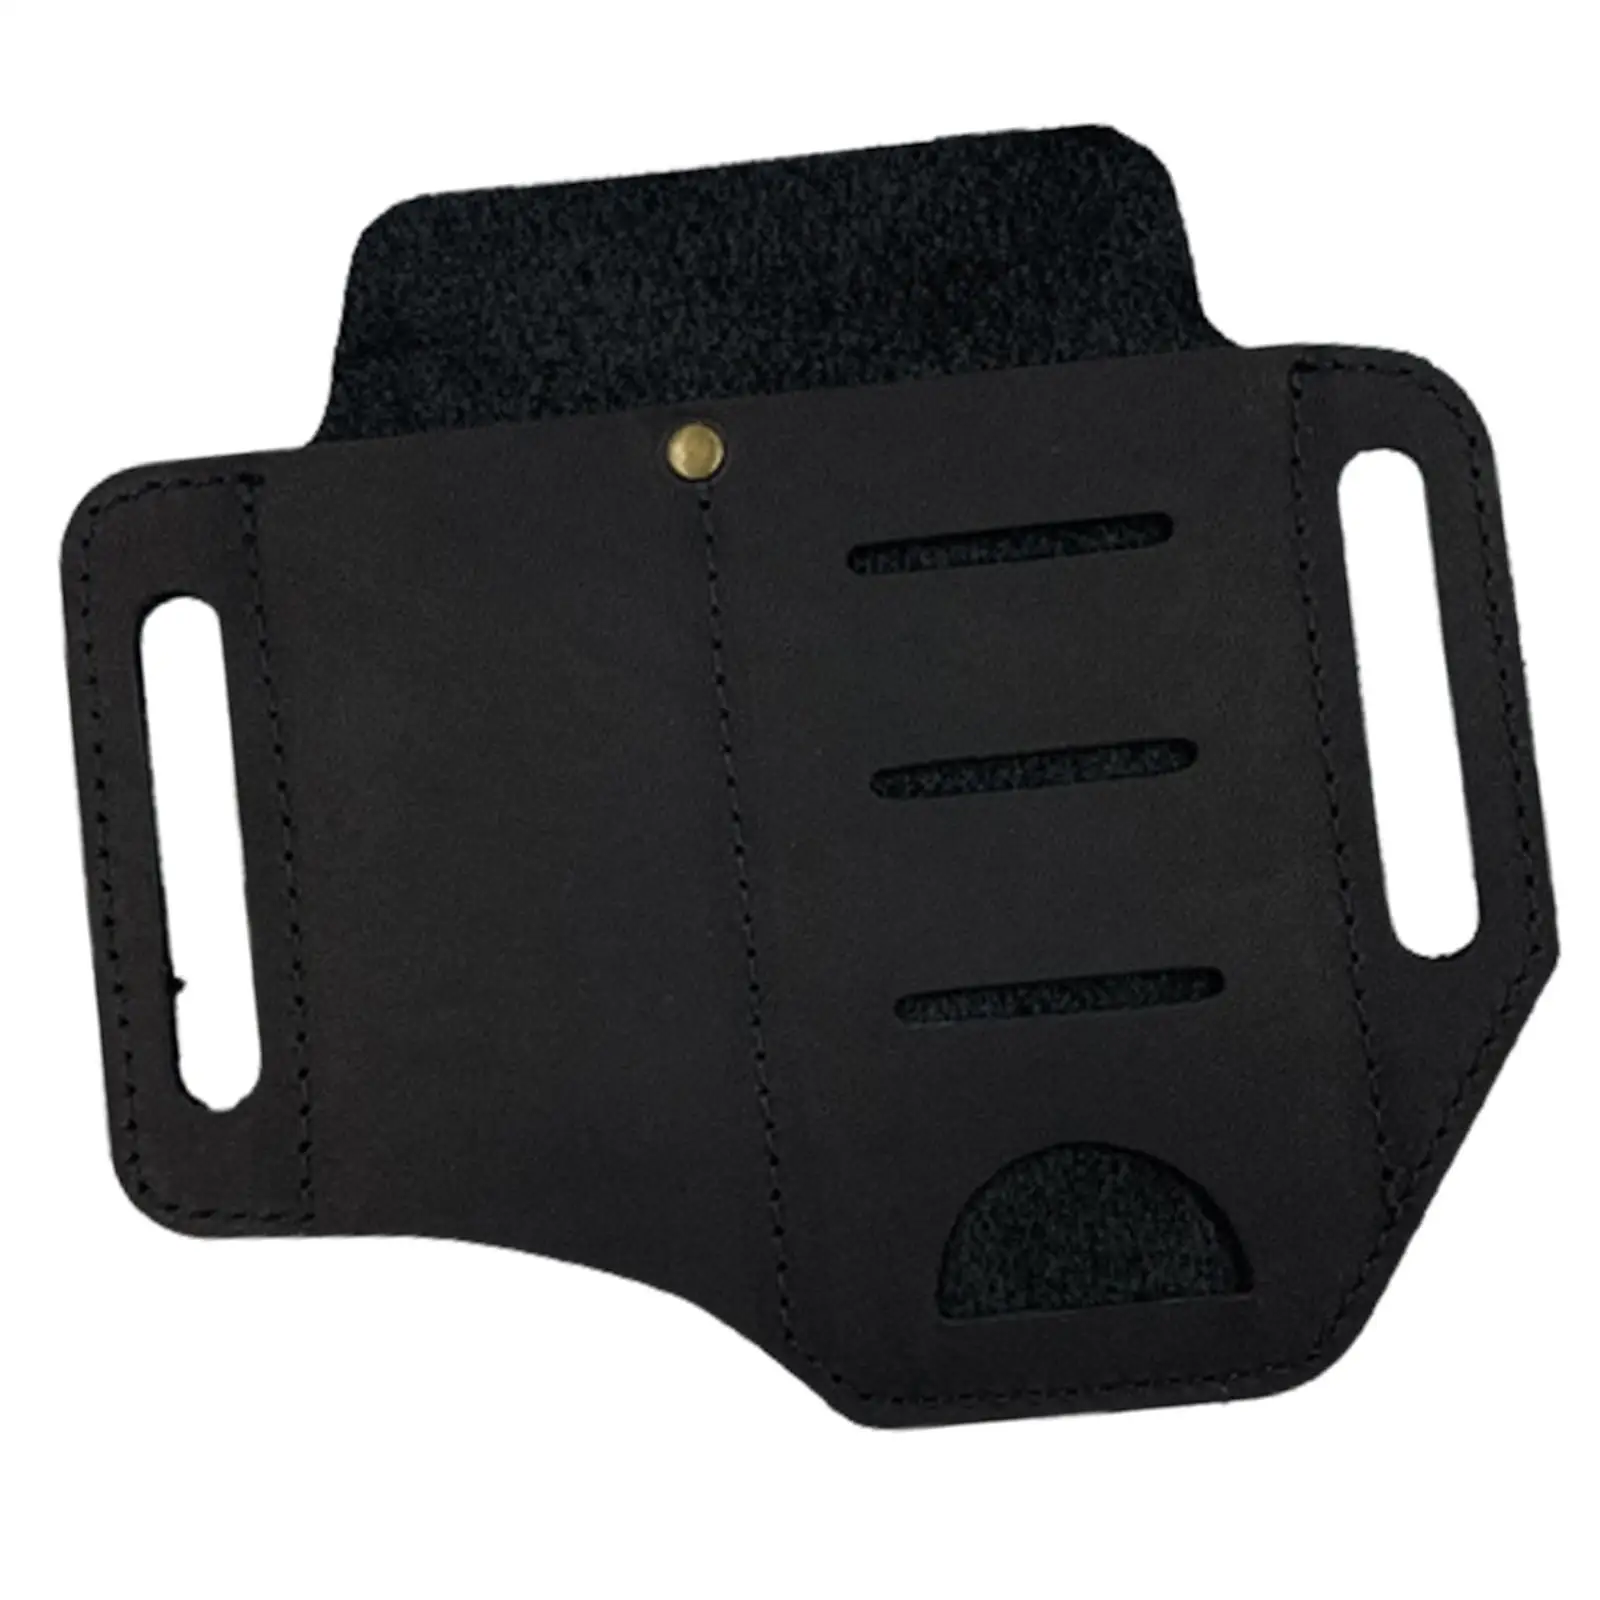 Waist Bag with Key Holder Multitool Sheath Pocket Organizer Flashlight Sheath for Daily Use Camping Outdoor Flashlight Tools